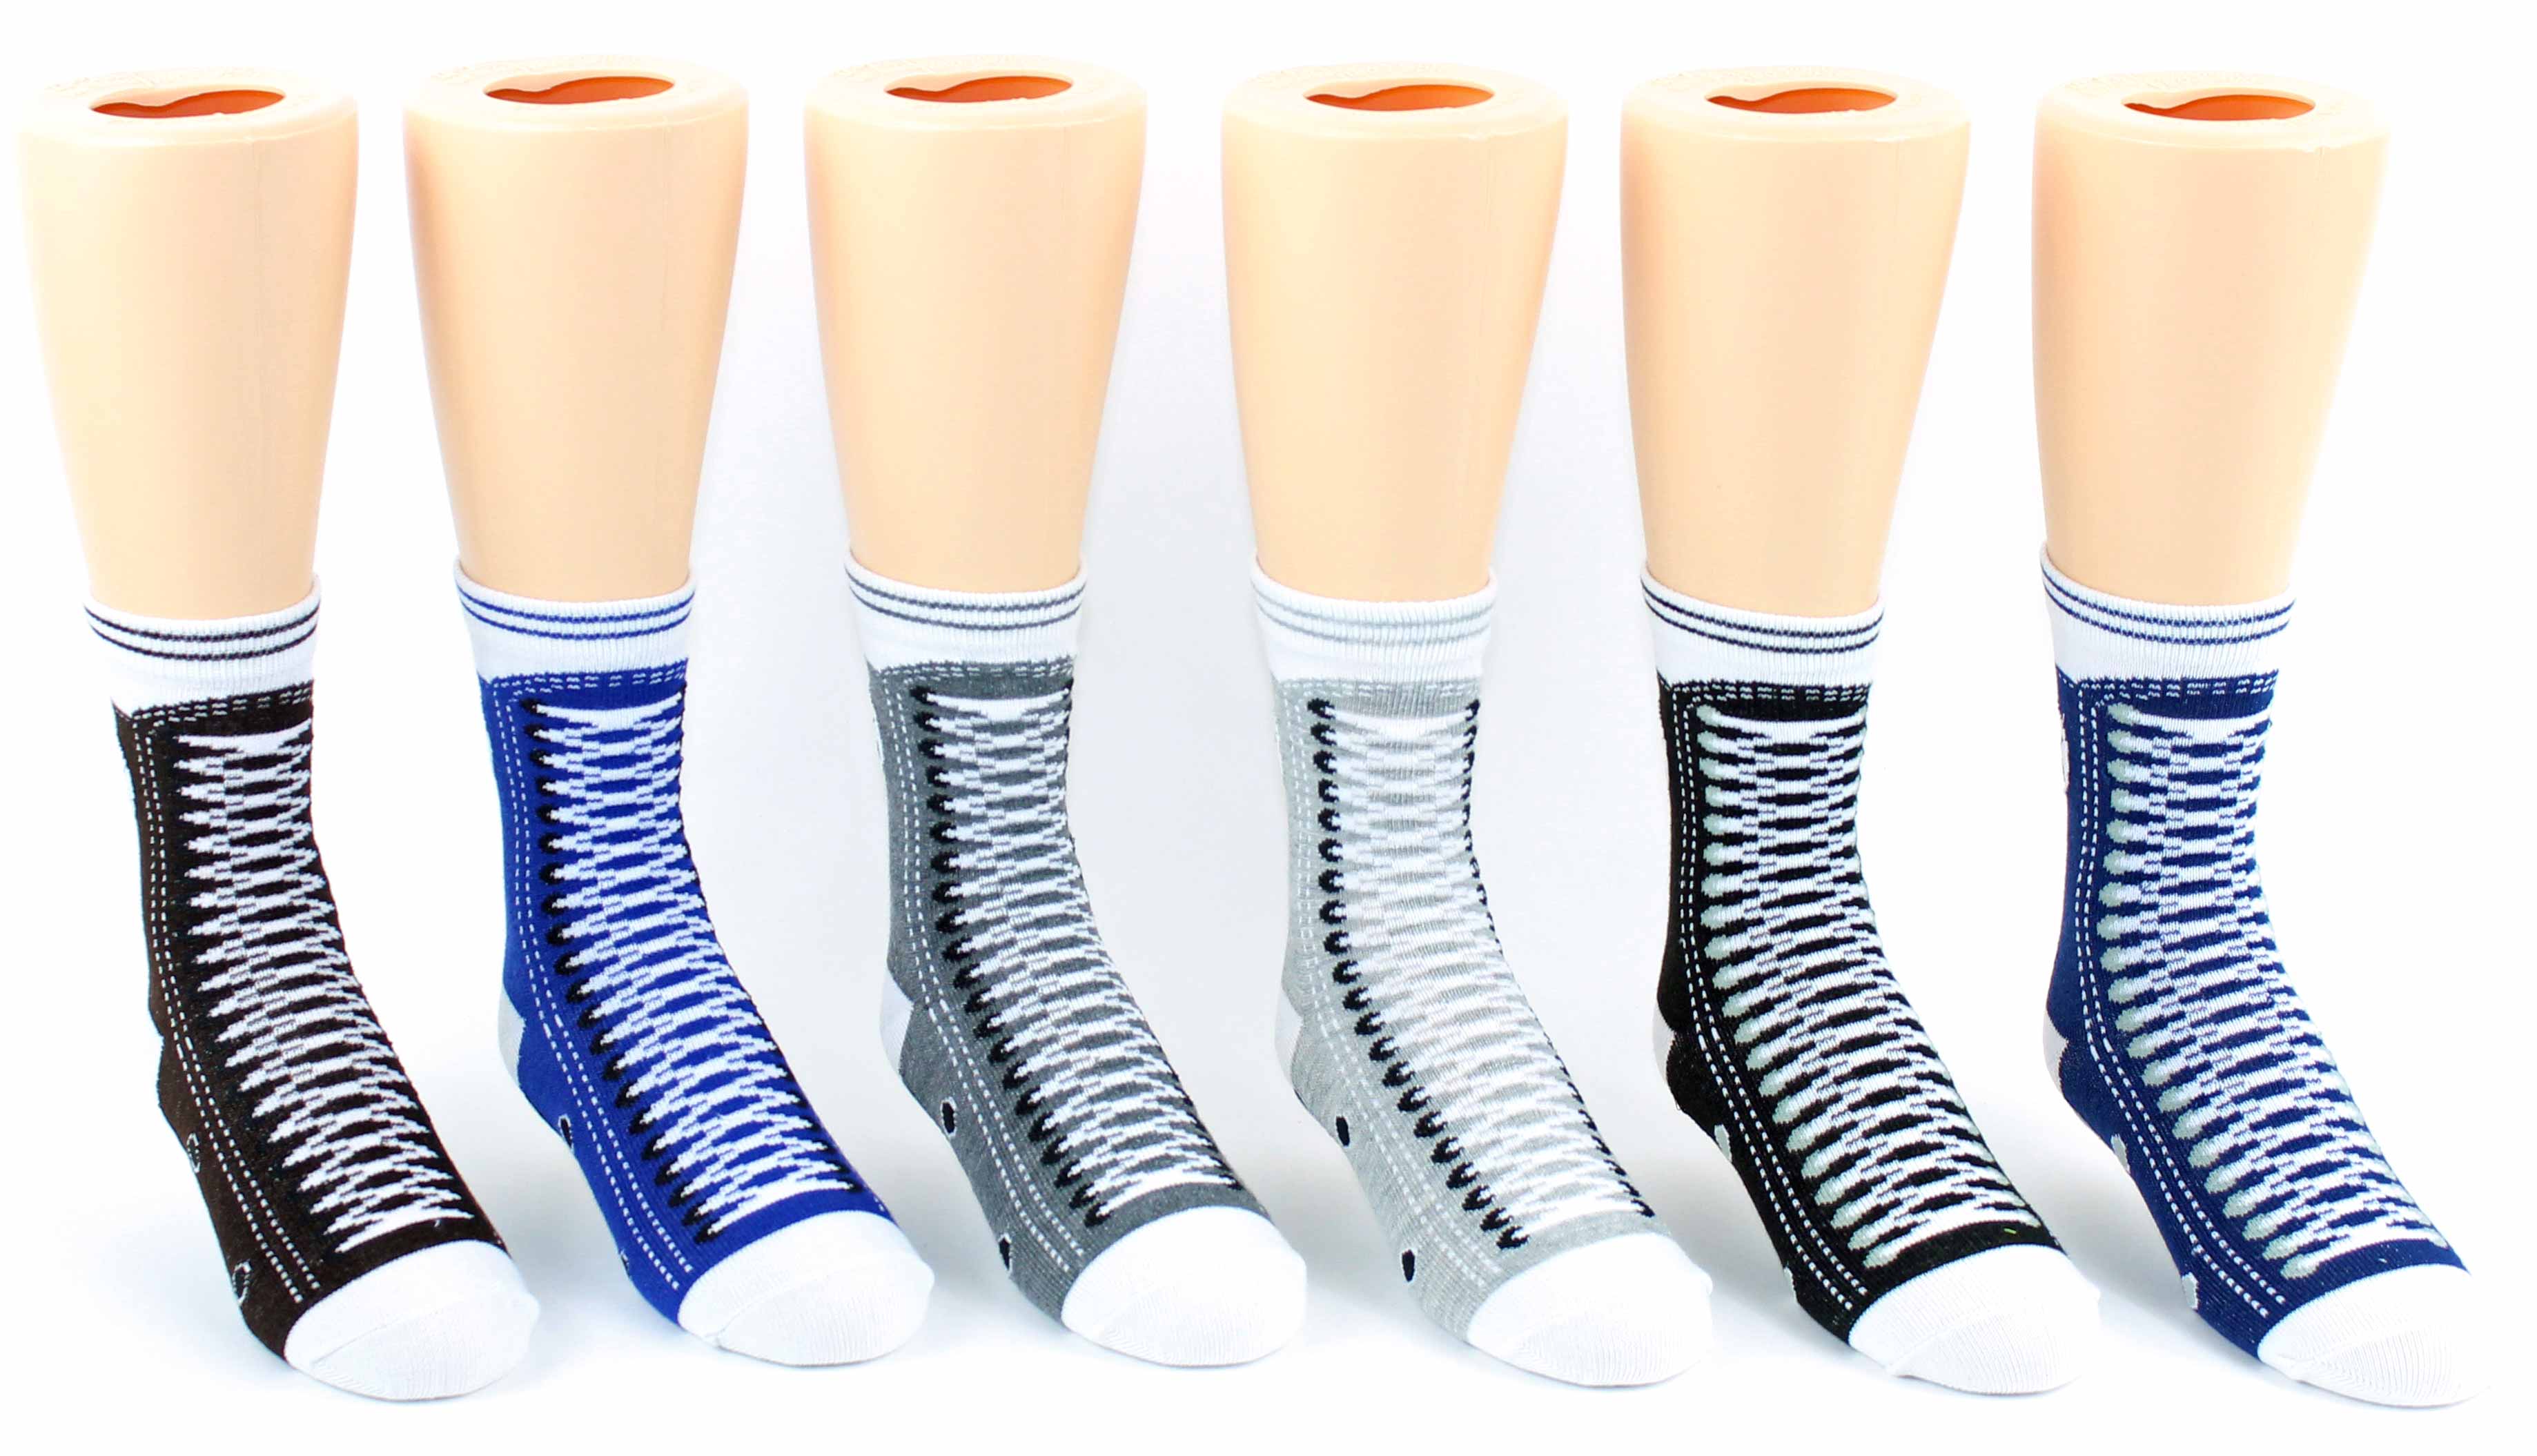 Boy's & Girl's Novelty Crew Socks - SNEAKER Print - Size 4-6